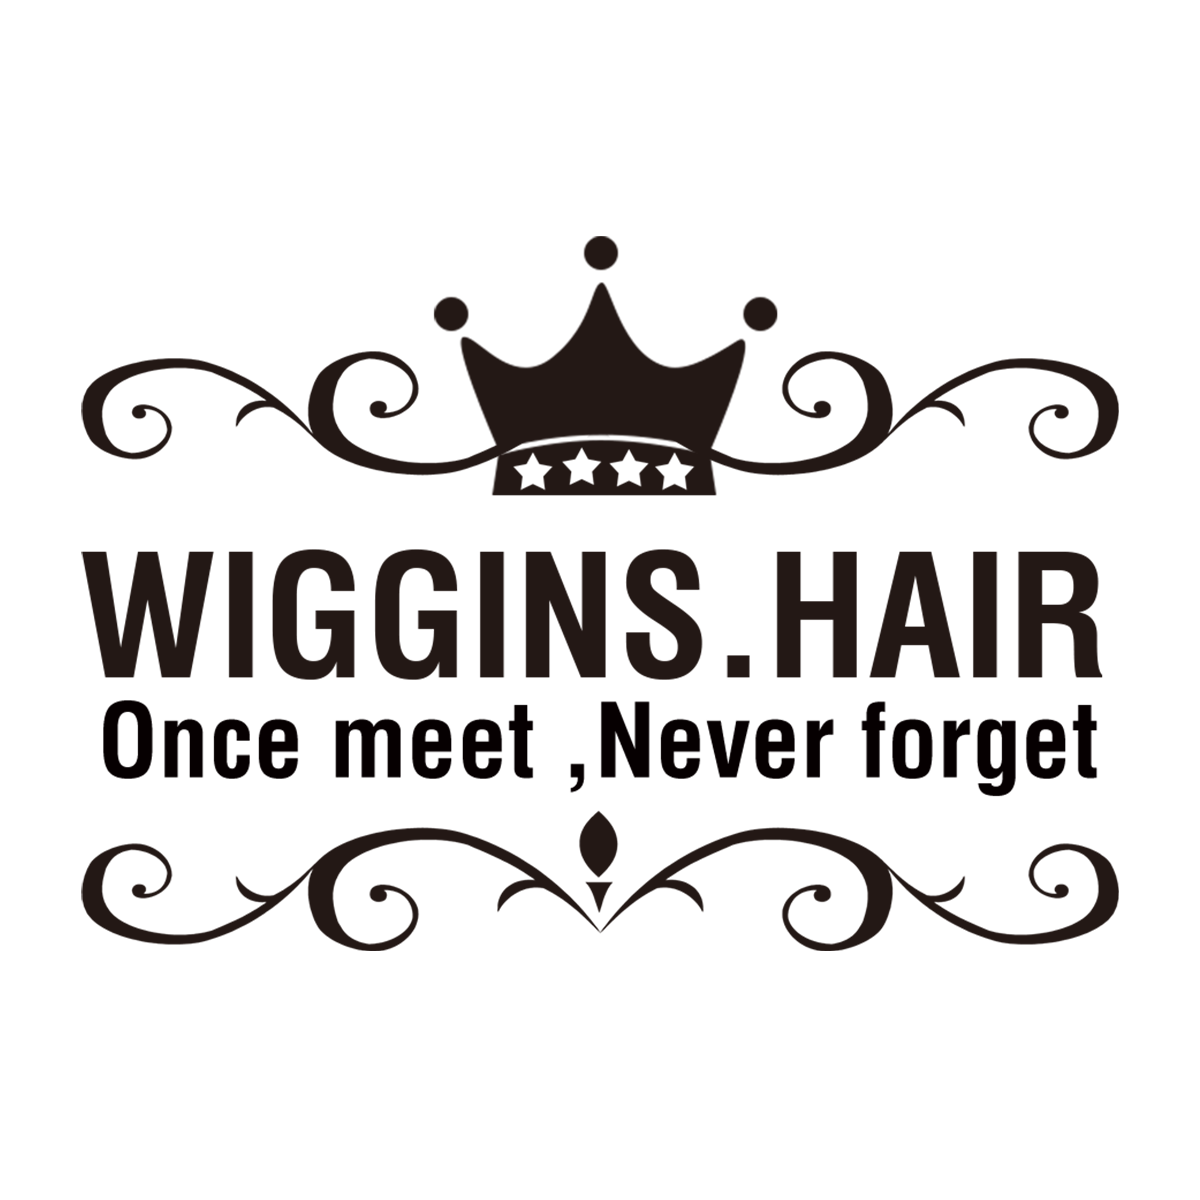 How Do Girls Get Free Wiggins Hair Wigs?